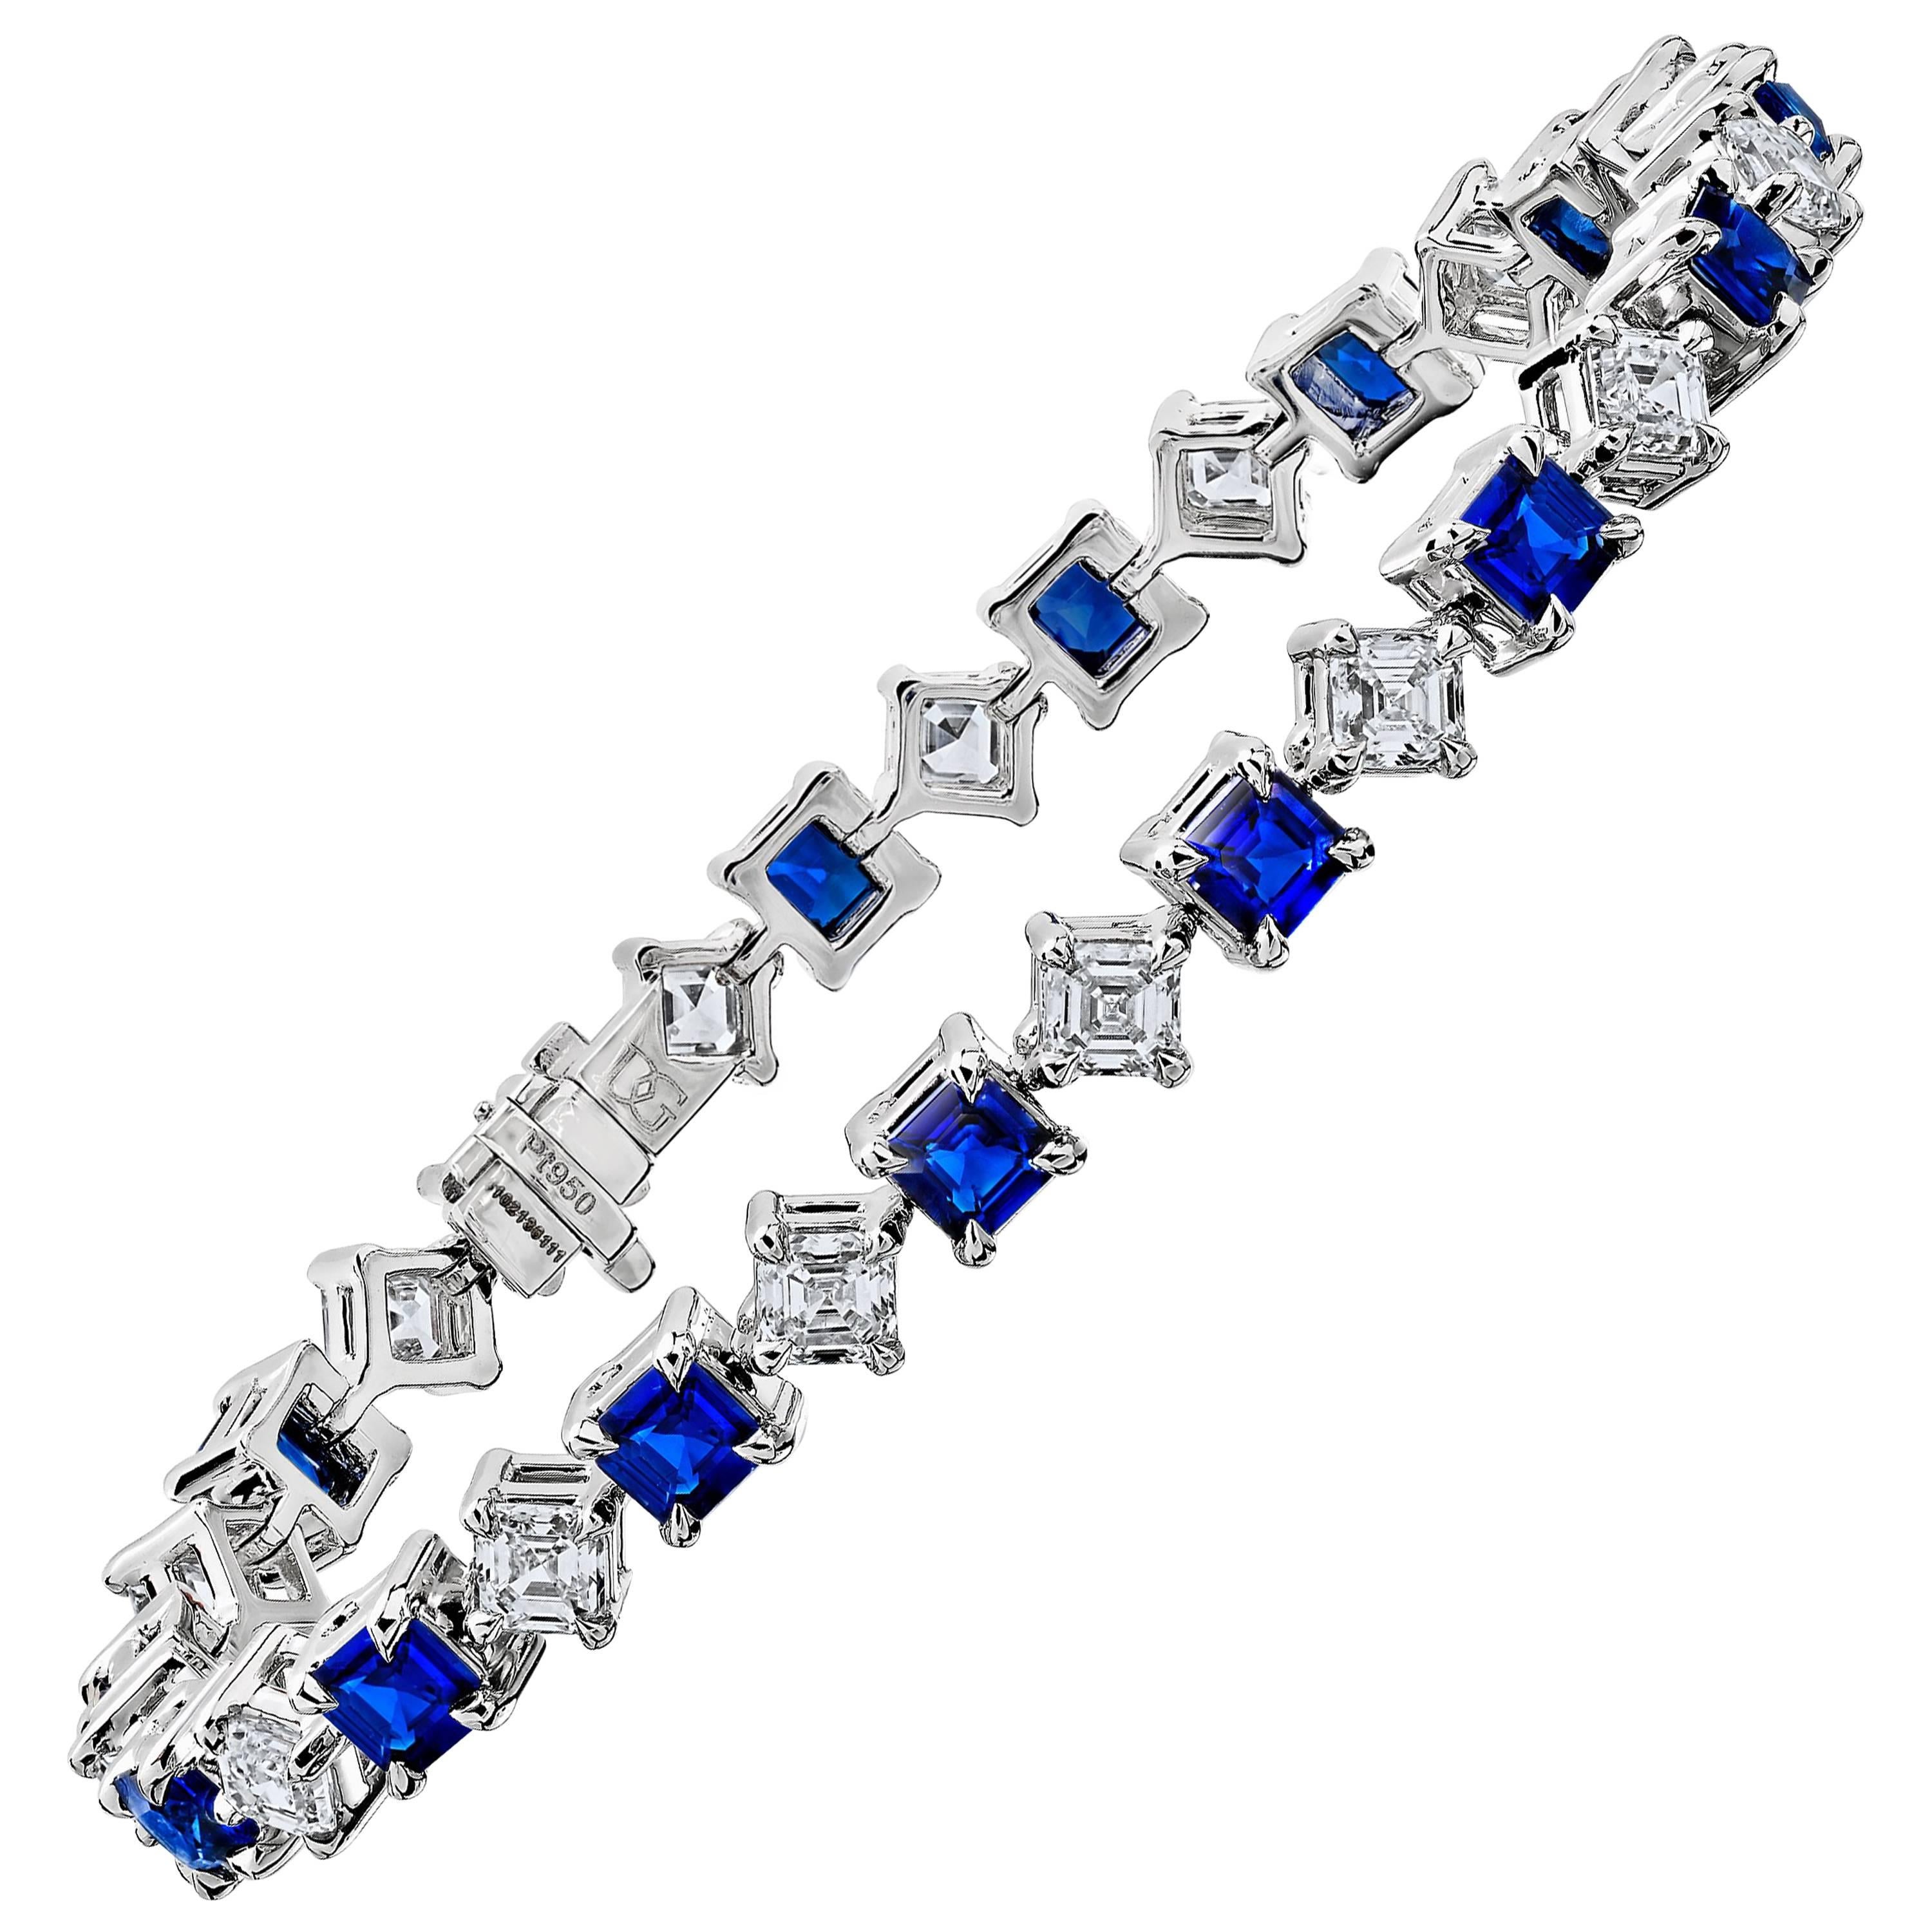  Square Emerald Cut Blue Sapphire and Diamond Platinum Bracelet